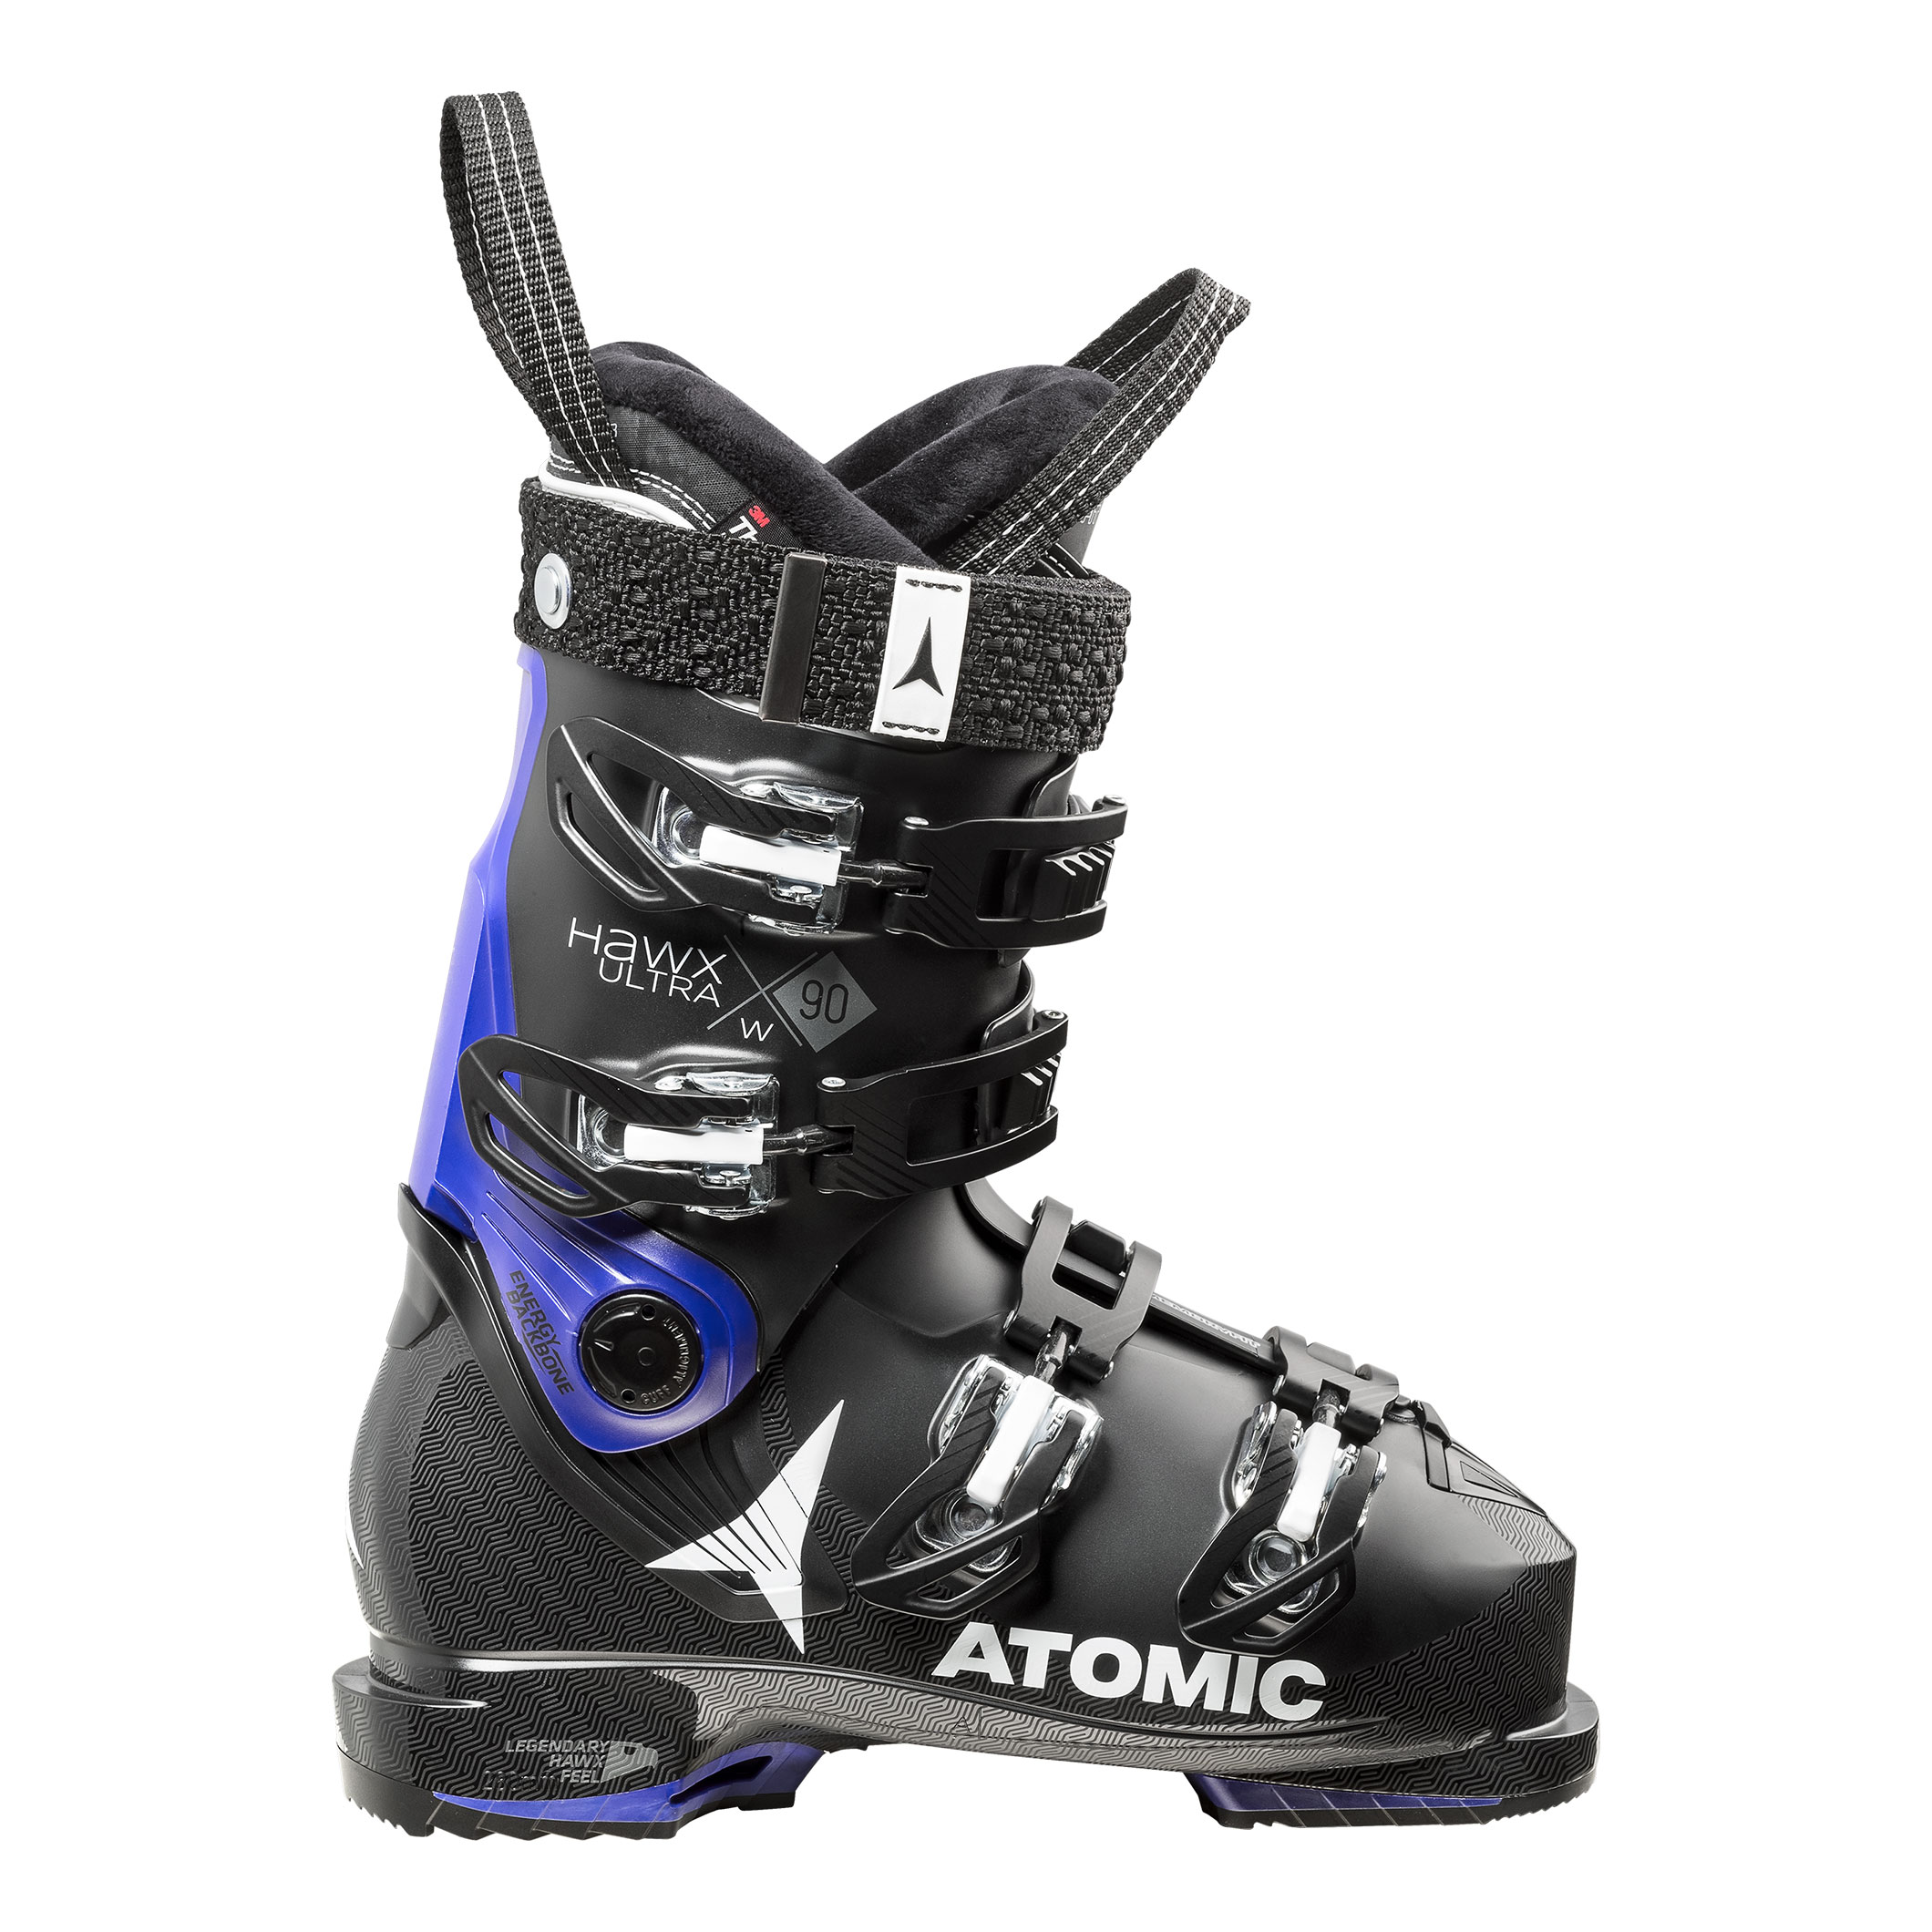 Ski Boots -  atomic HAWX PRIME 80